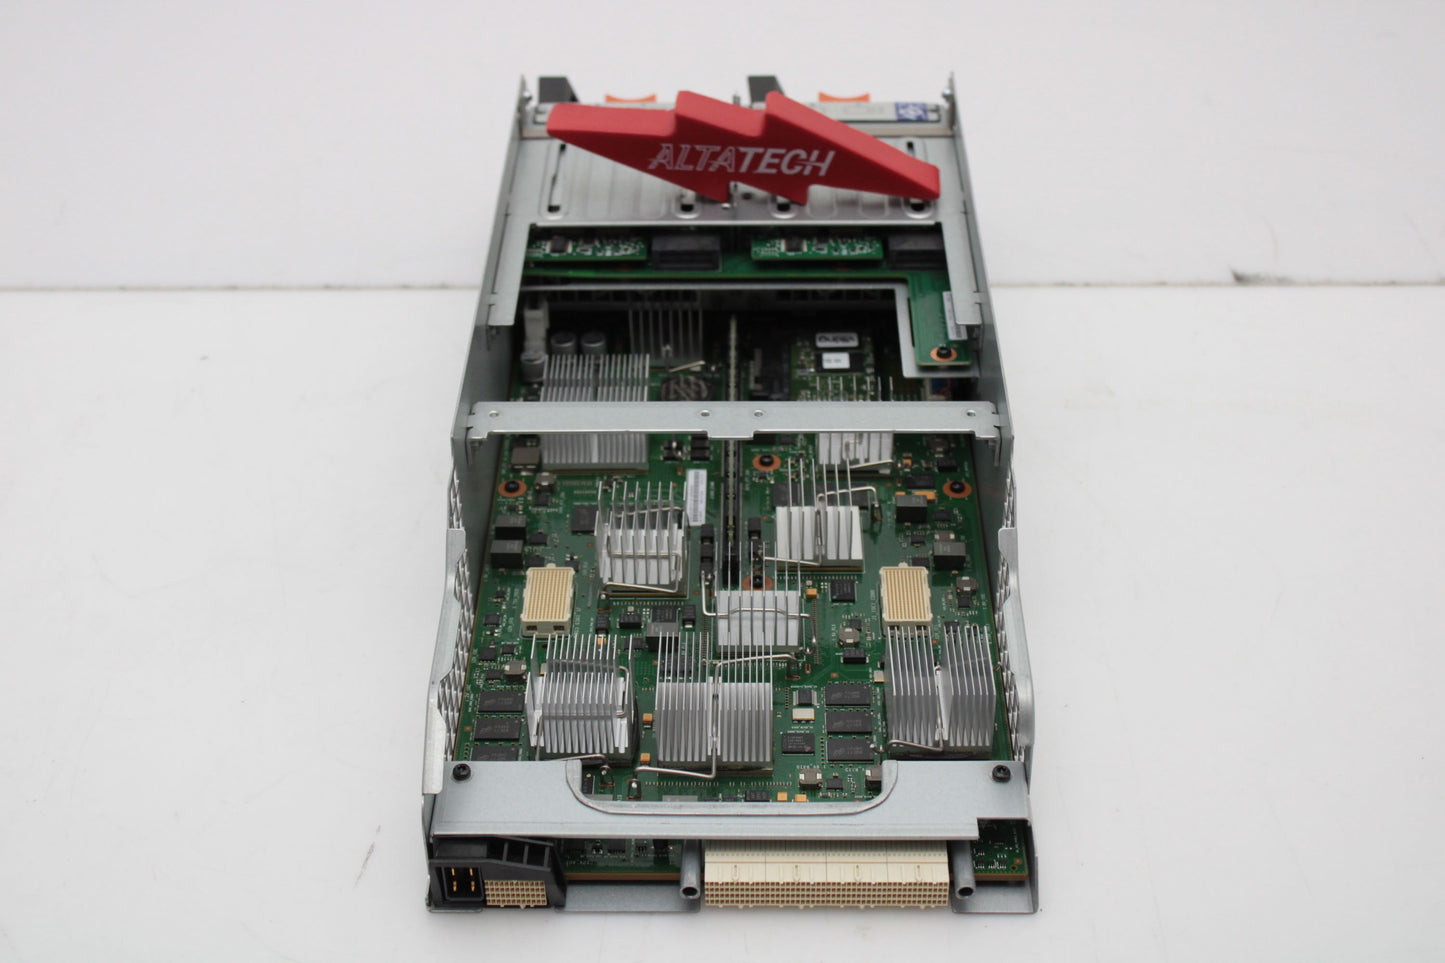 IBM 01EK070 9843-AE2 FLASHSYSTEM CANNISTER, Used